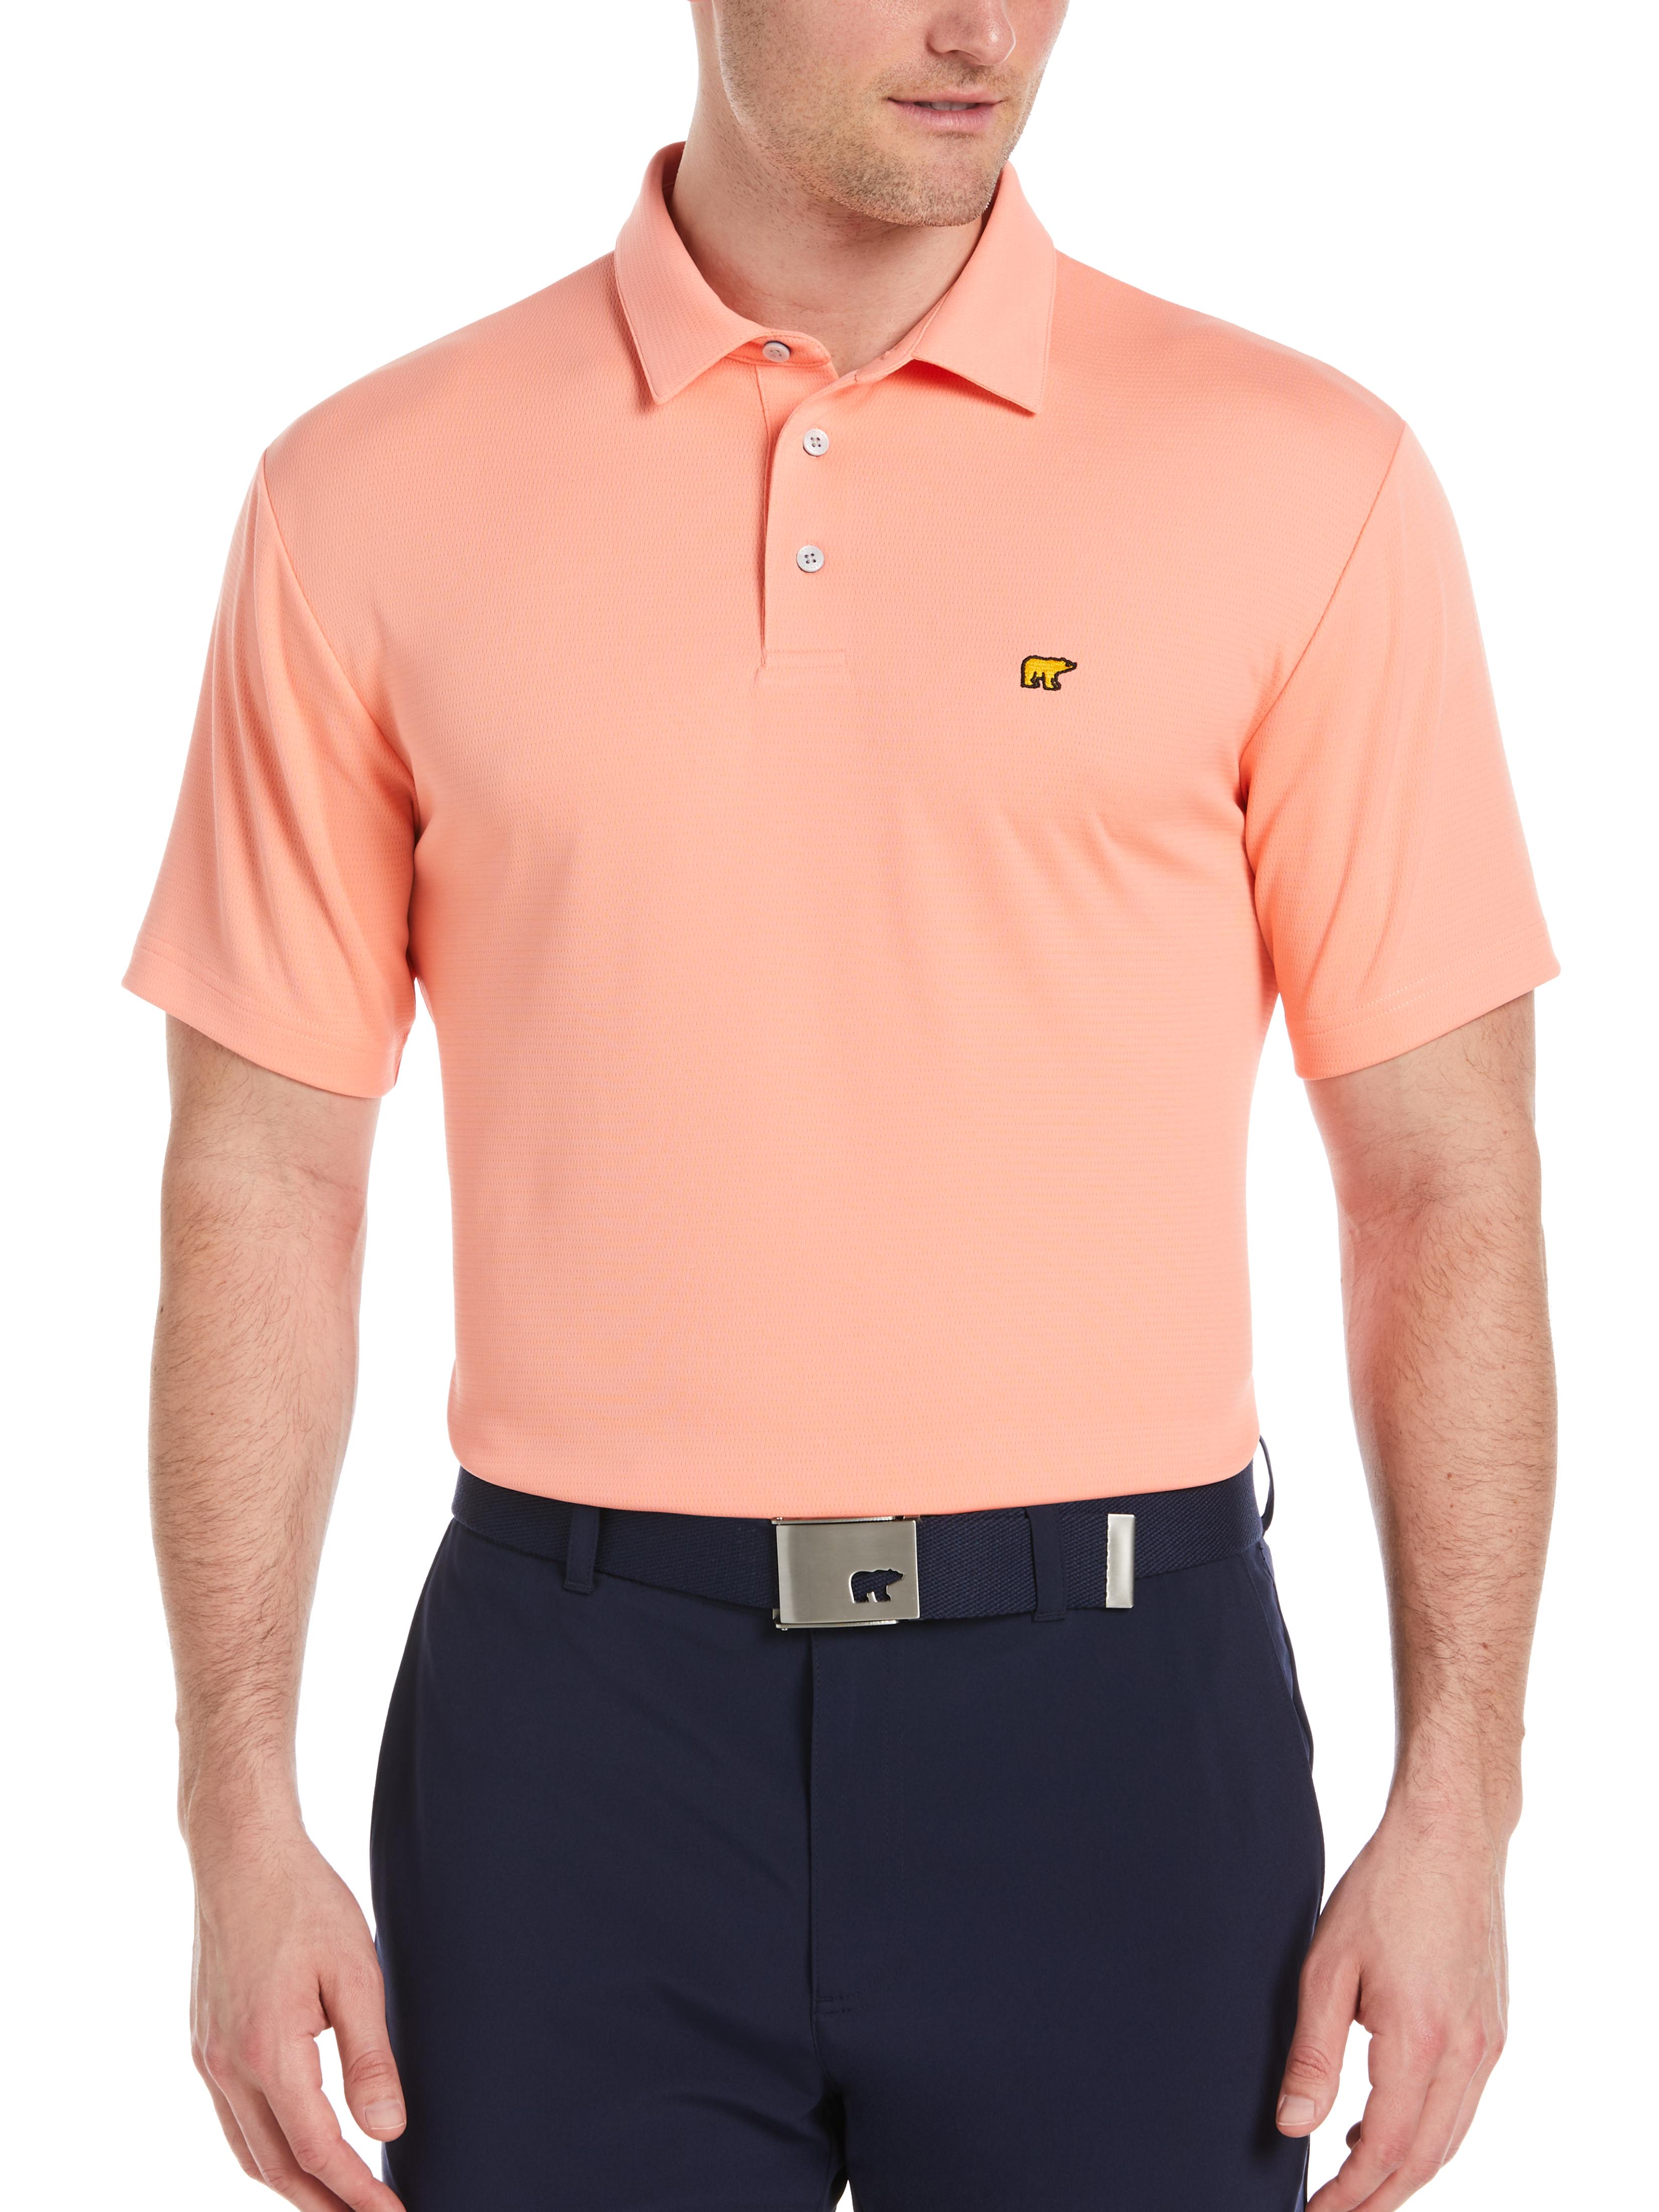 Jack Nicklaus Mens Solid Textured Golf Polo Shirt, Size Large, Desert Flower Pink, 100% Polyester | Golf Apparel Shop